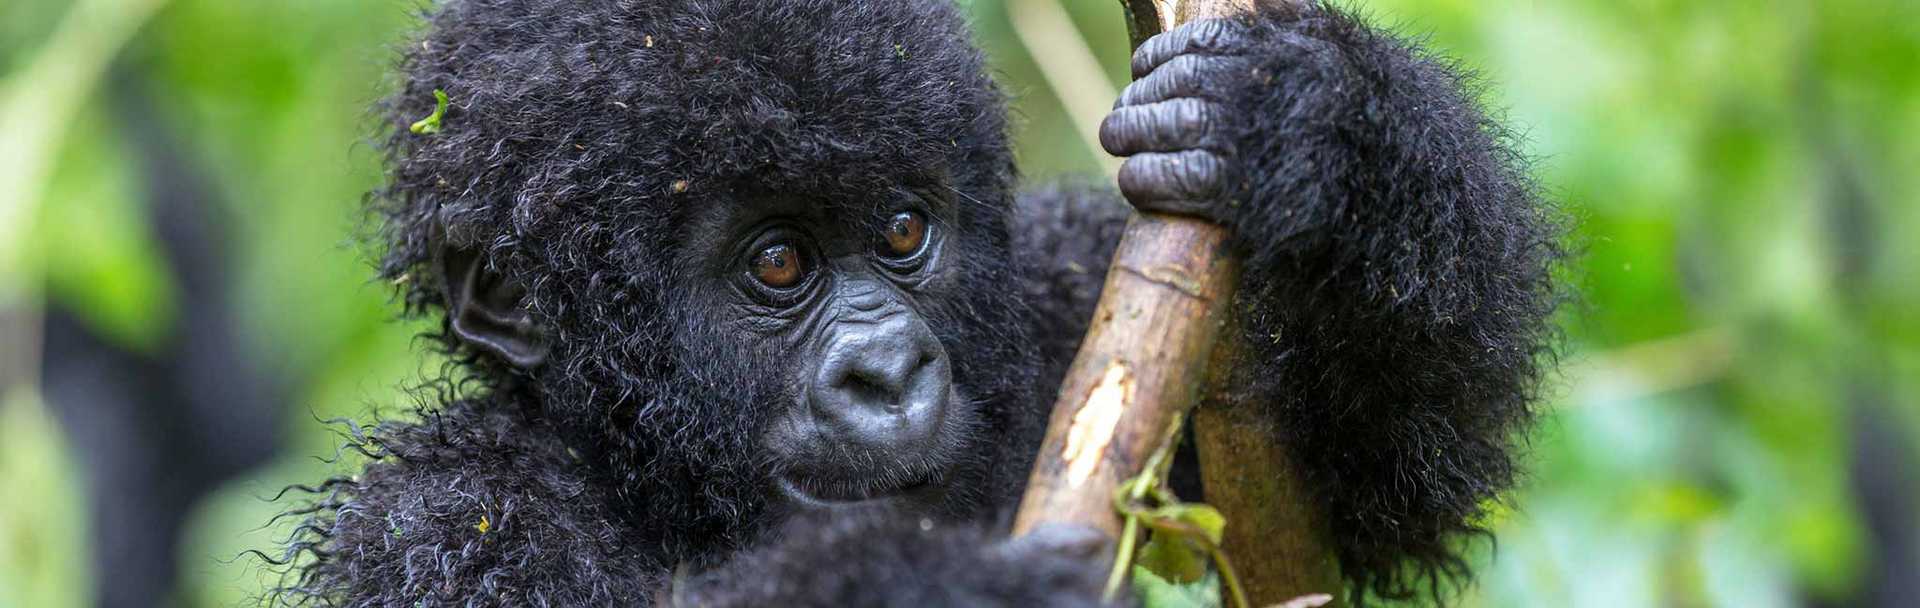 Uganda Safaris - Baby gorilla in Virunga National Park